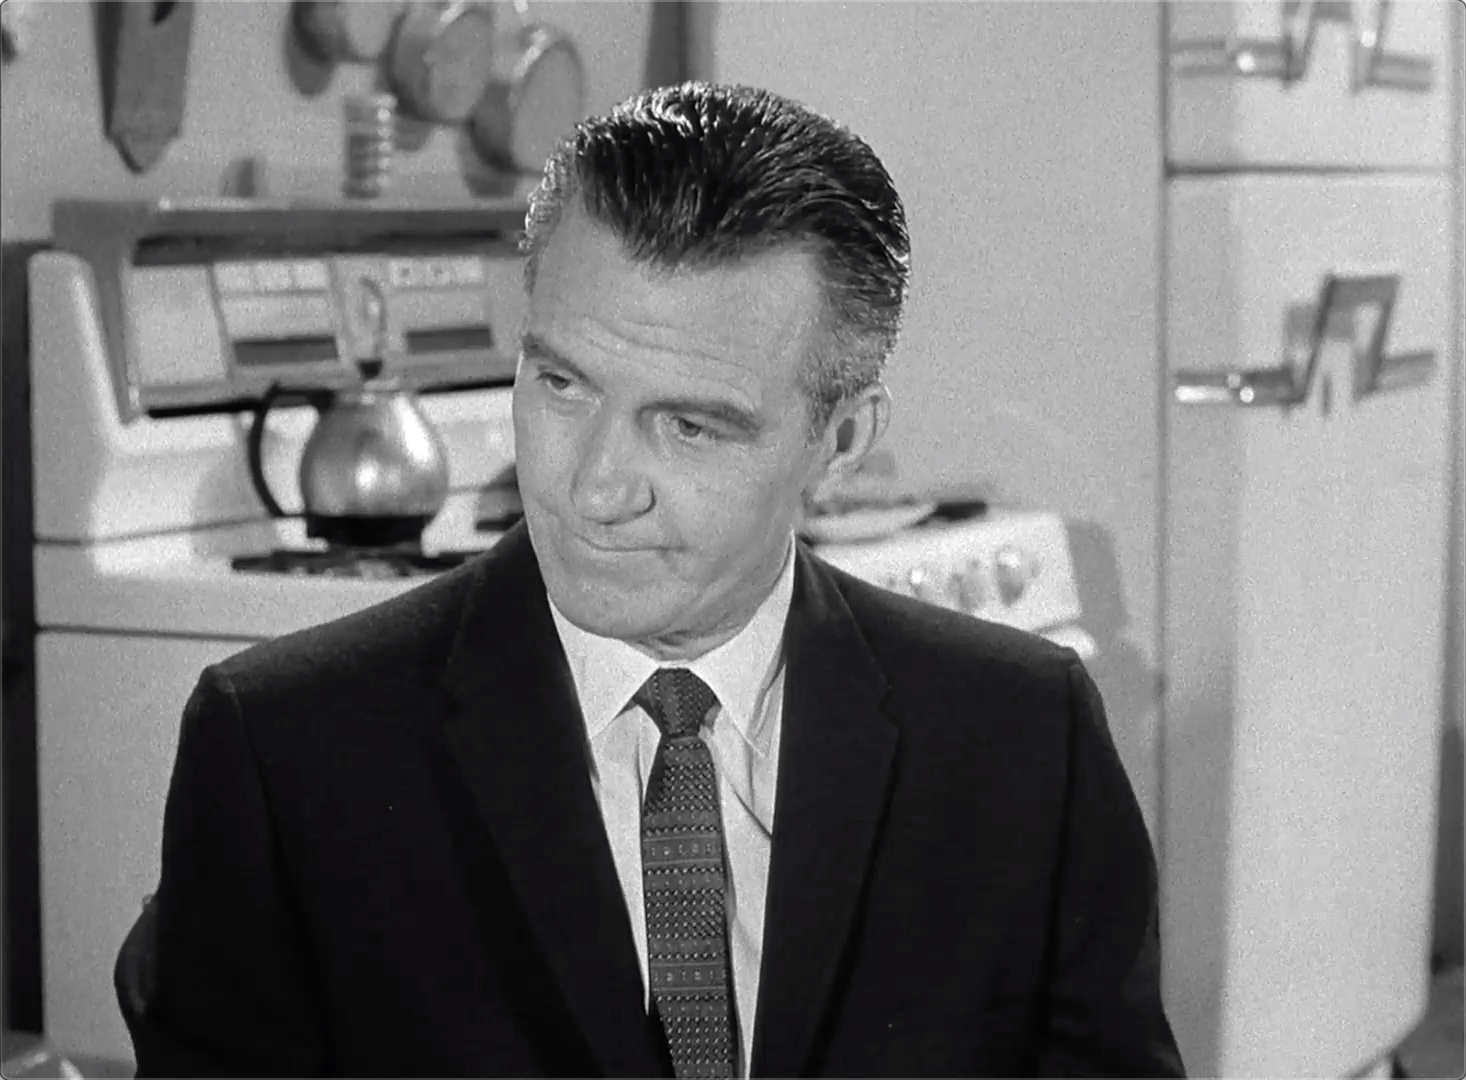 Leave it to Beaver S02E39 Most interesting Character (Jun.25.1959)-101.jpg